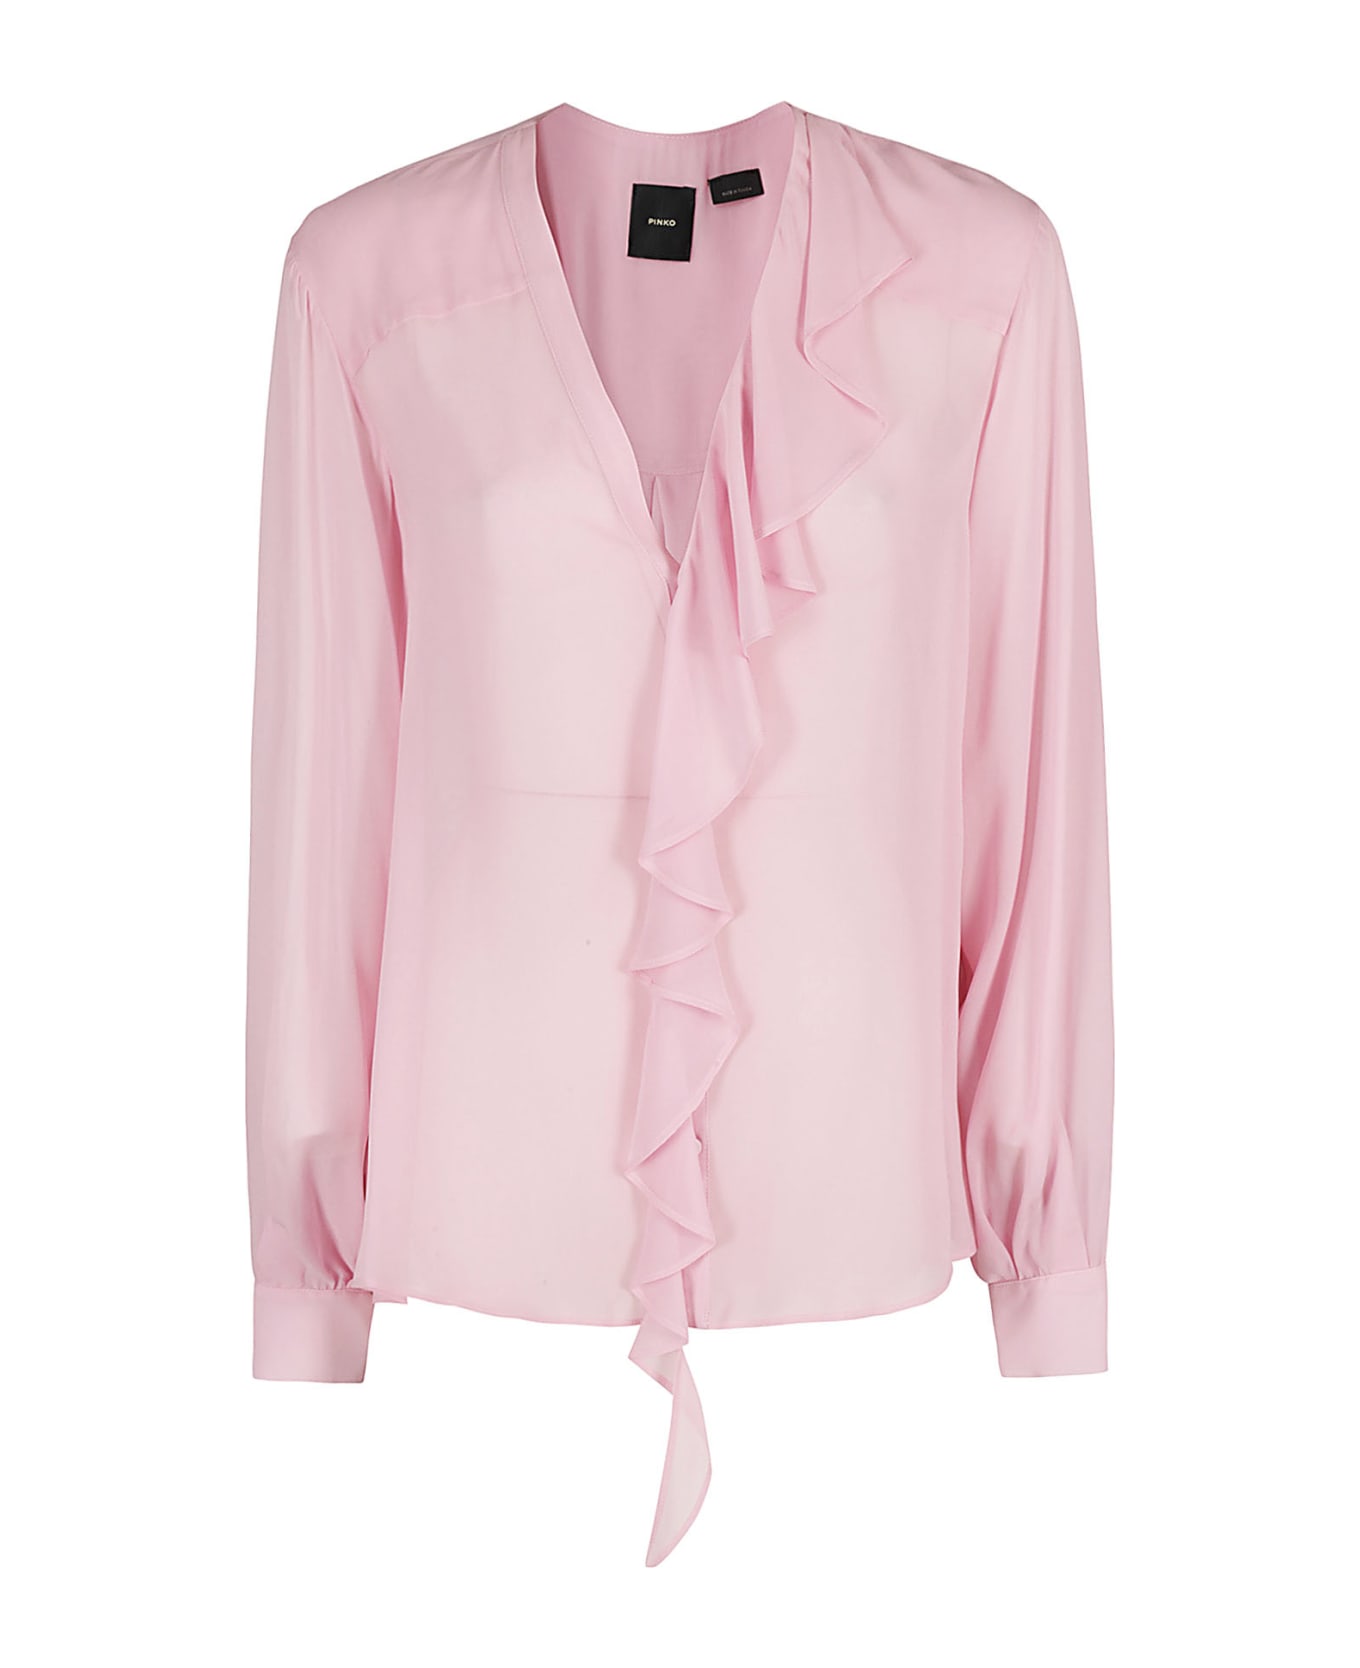 Pinko Prosecco Shirt - Pink ブラウス